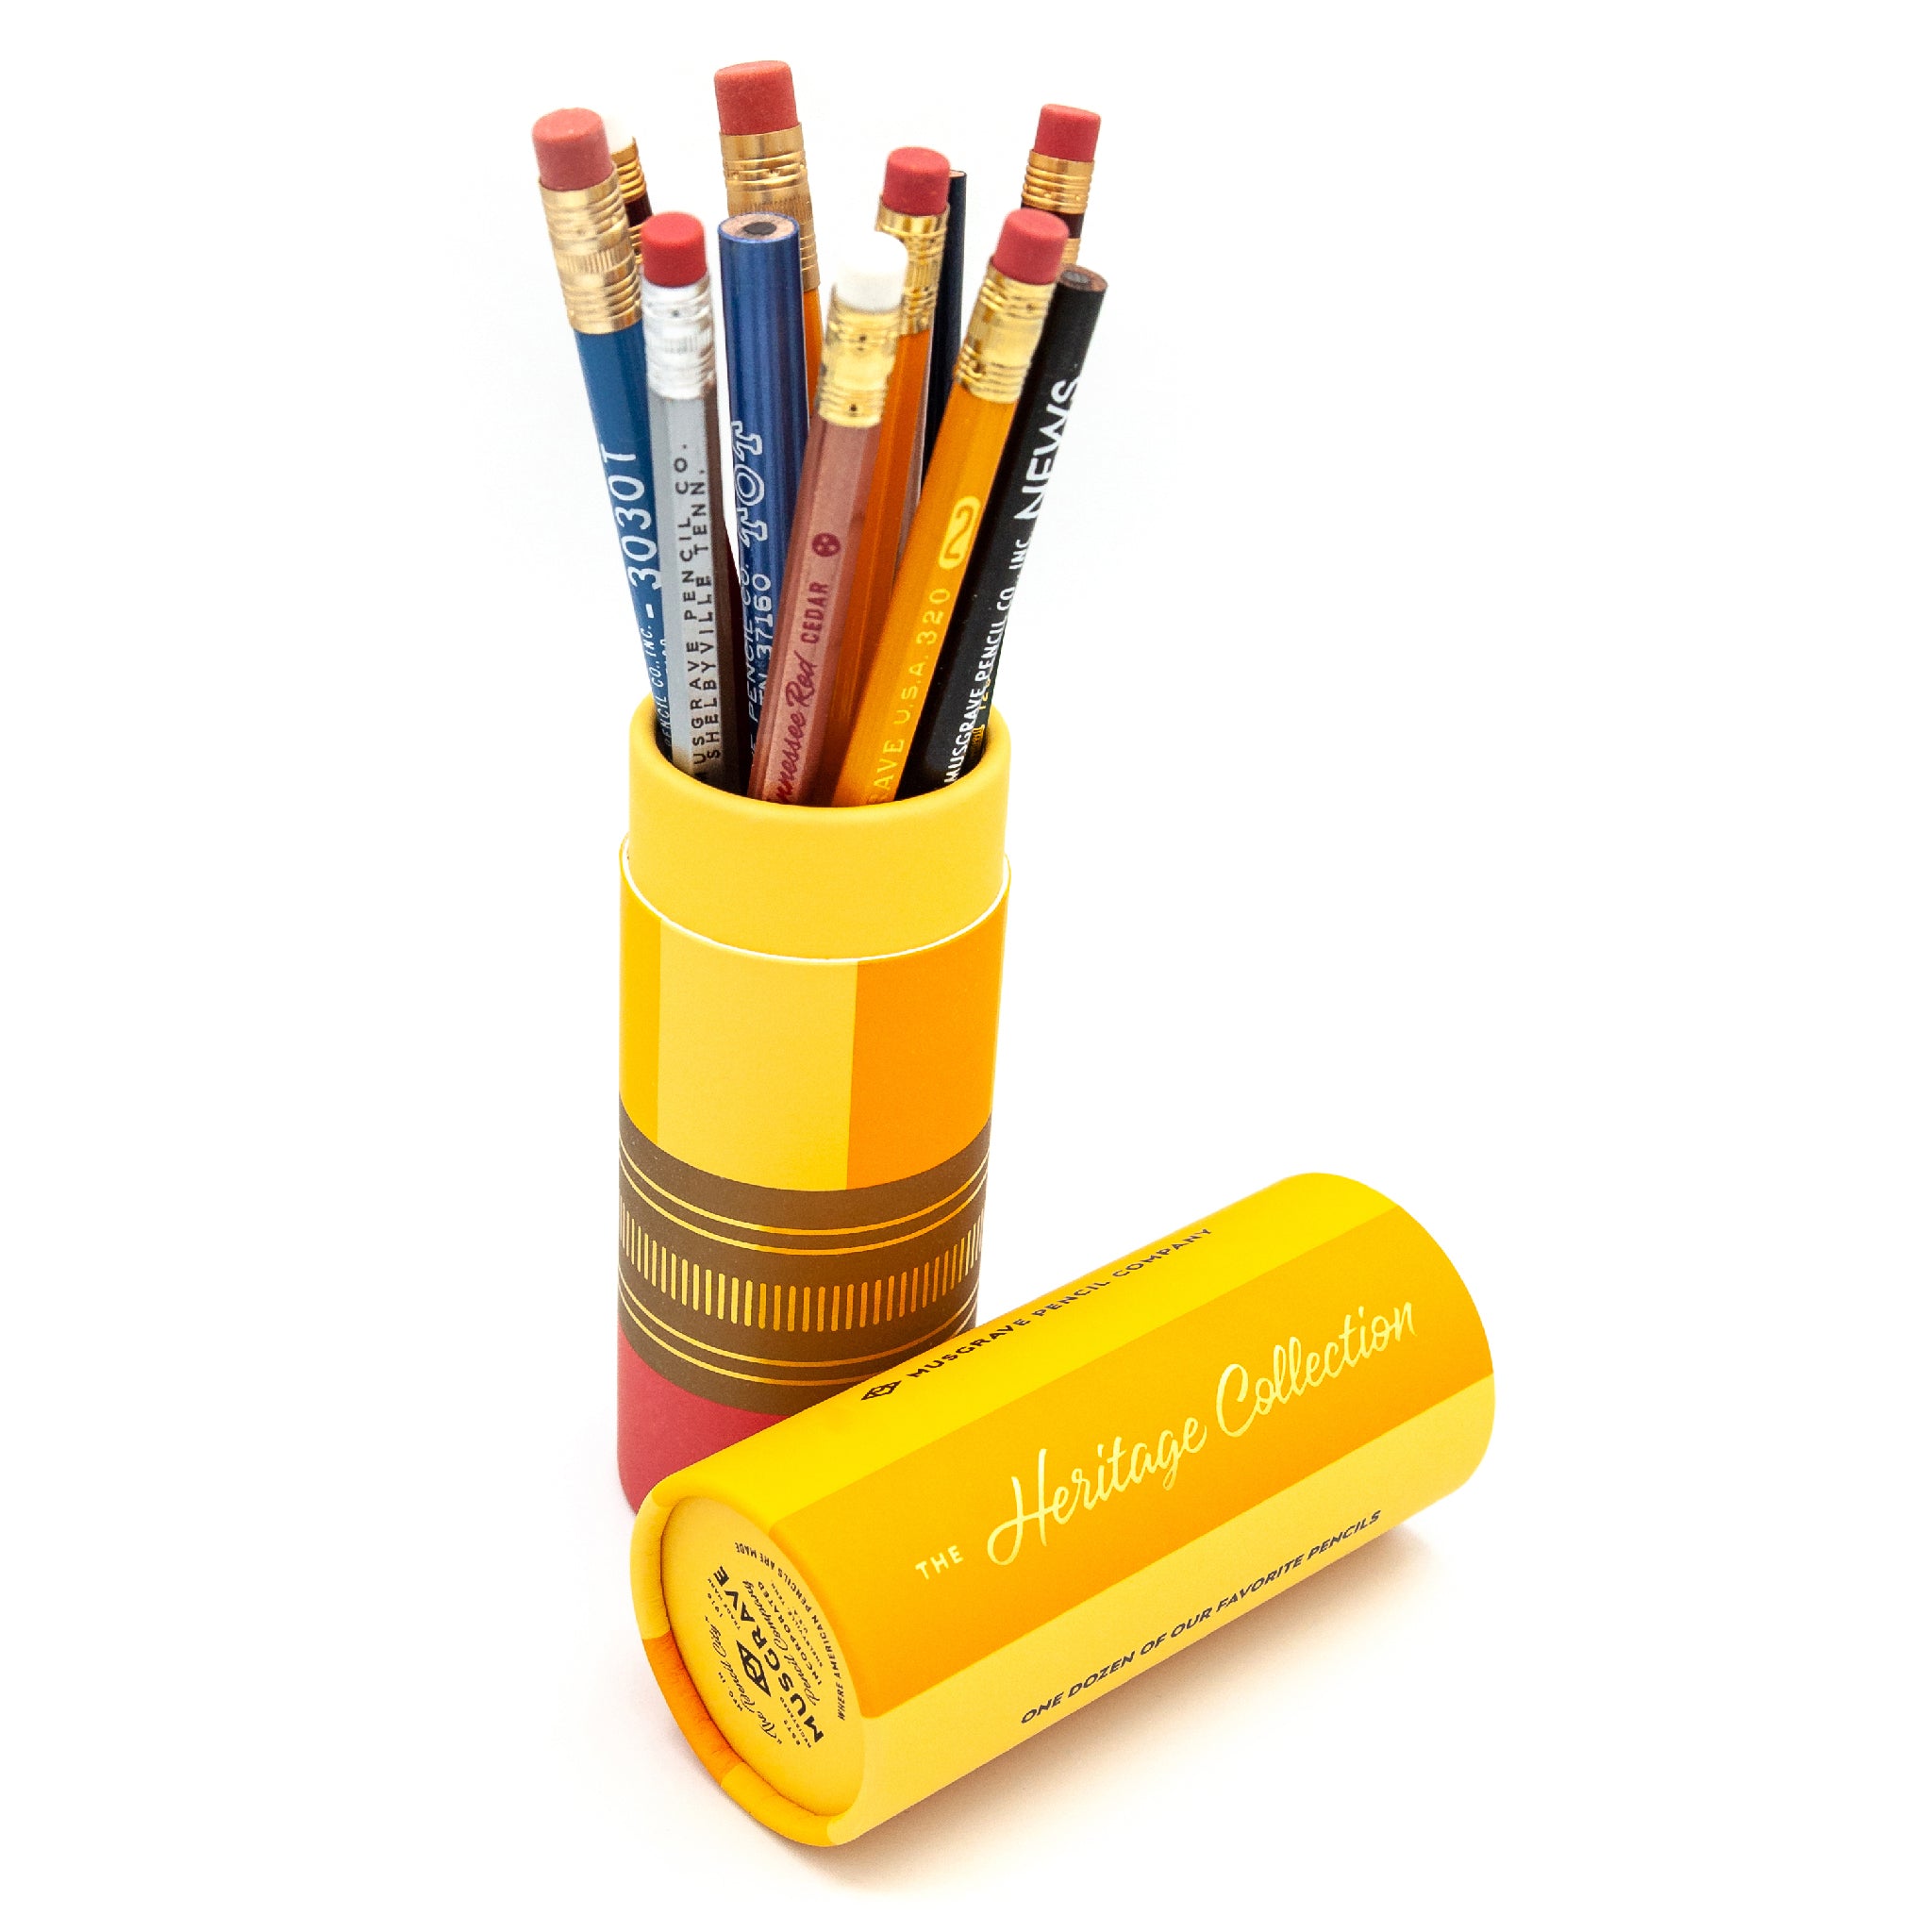 12 Mix Match Engraved Pencil Set Funny Pencils Tv Show 